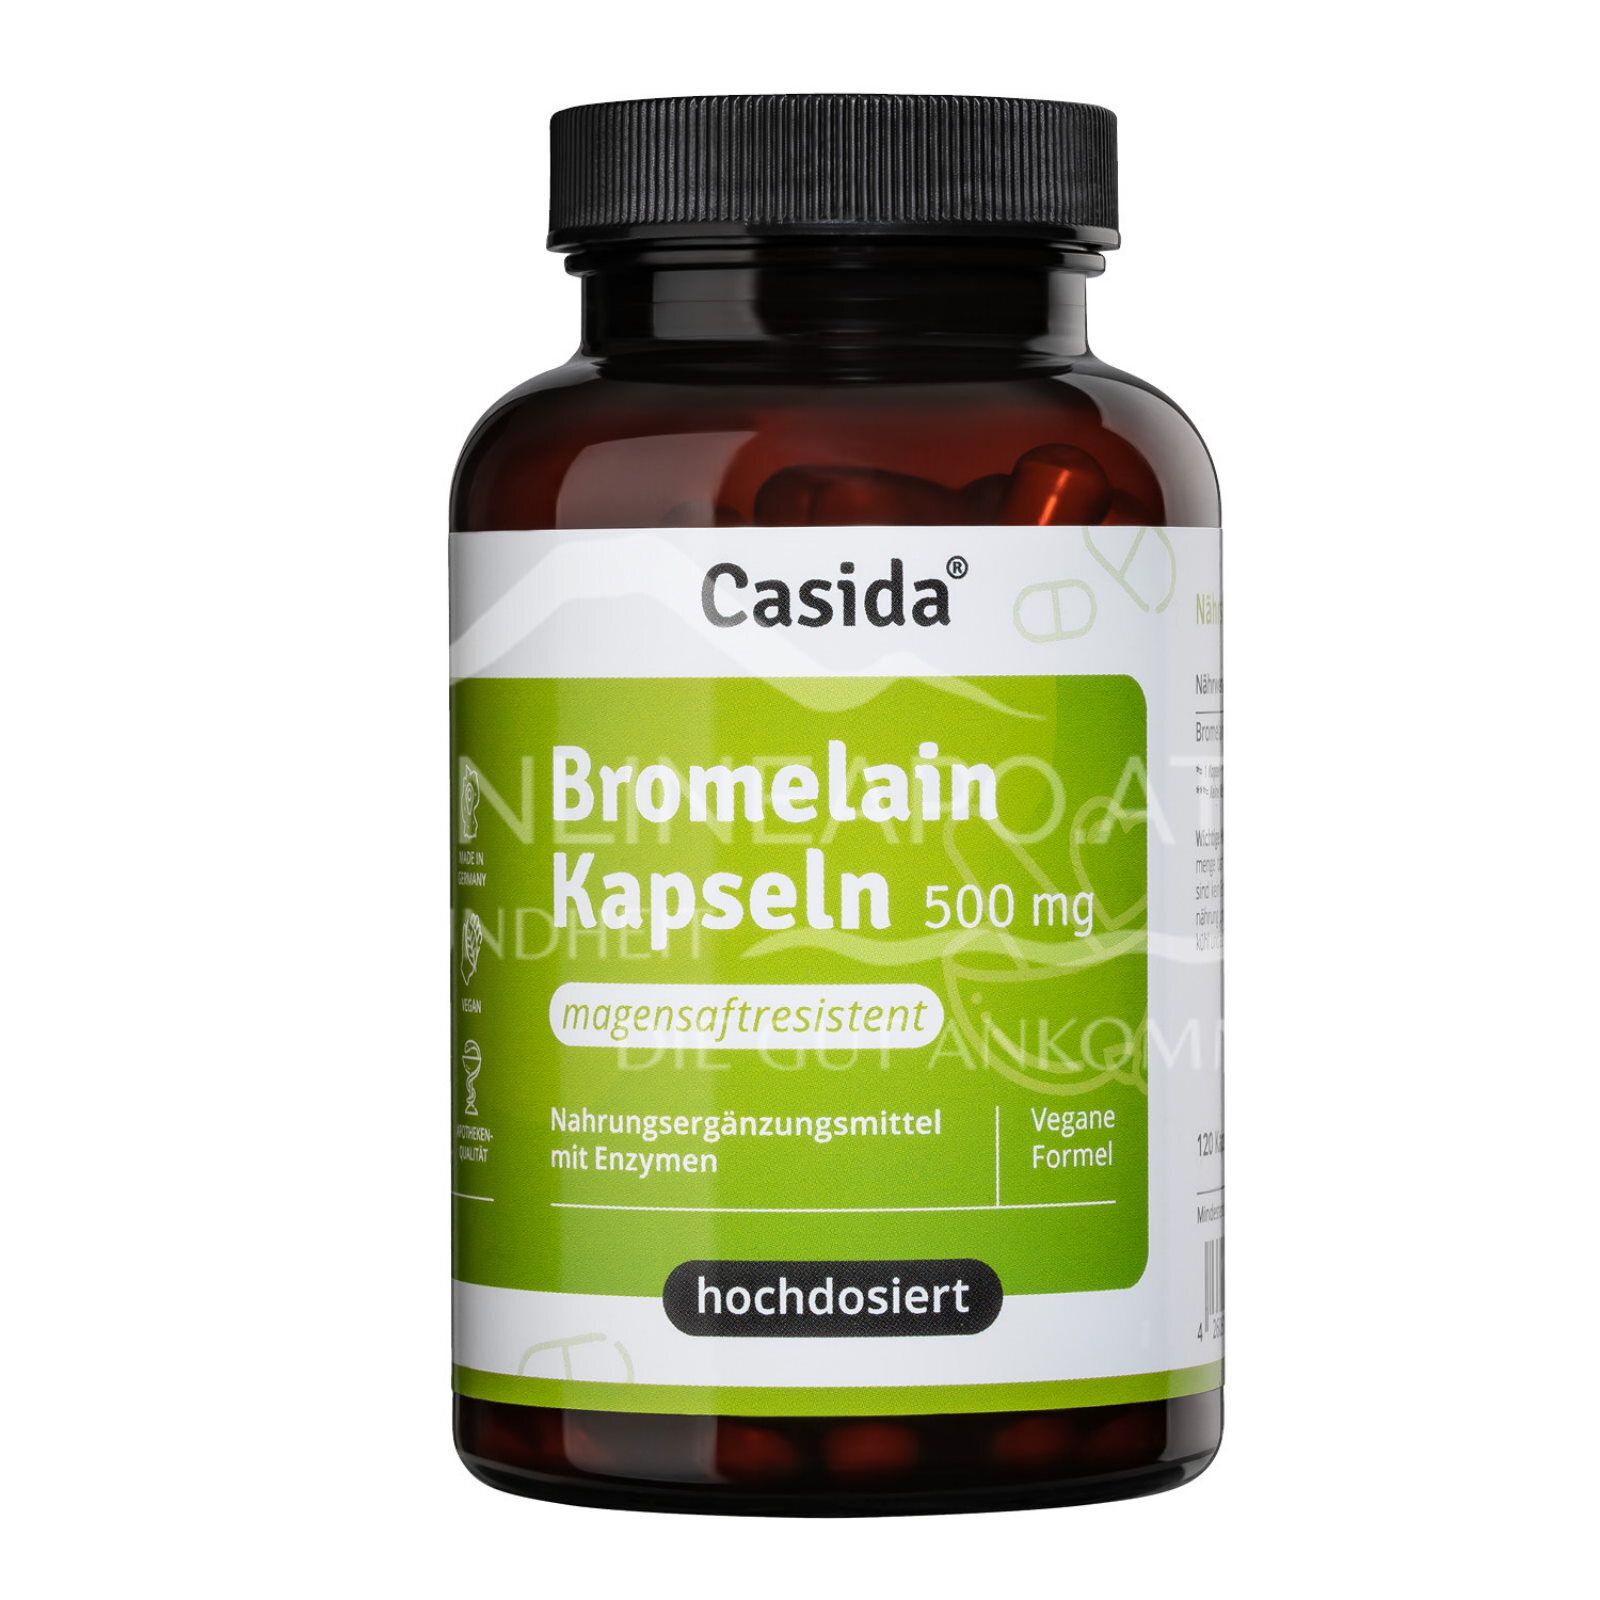 Casida Bromelain Kapseln 500 mg hochdosiert magensaftresistent